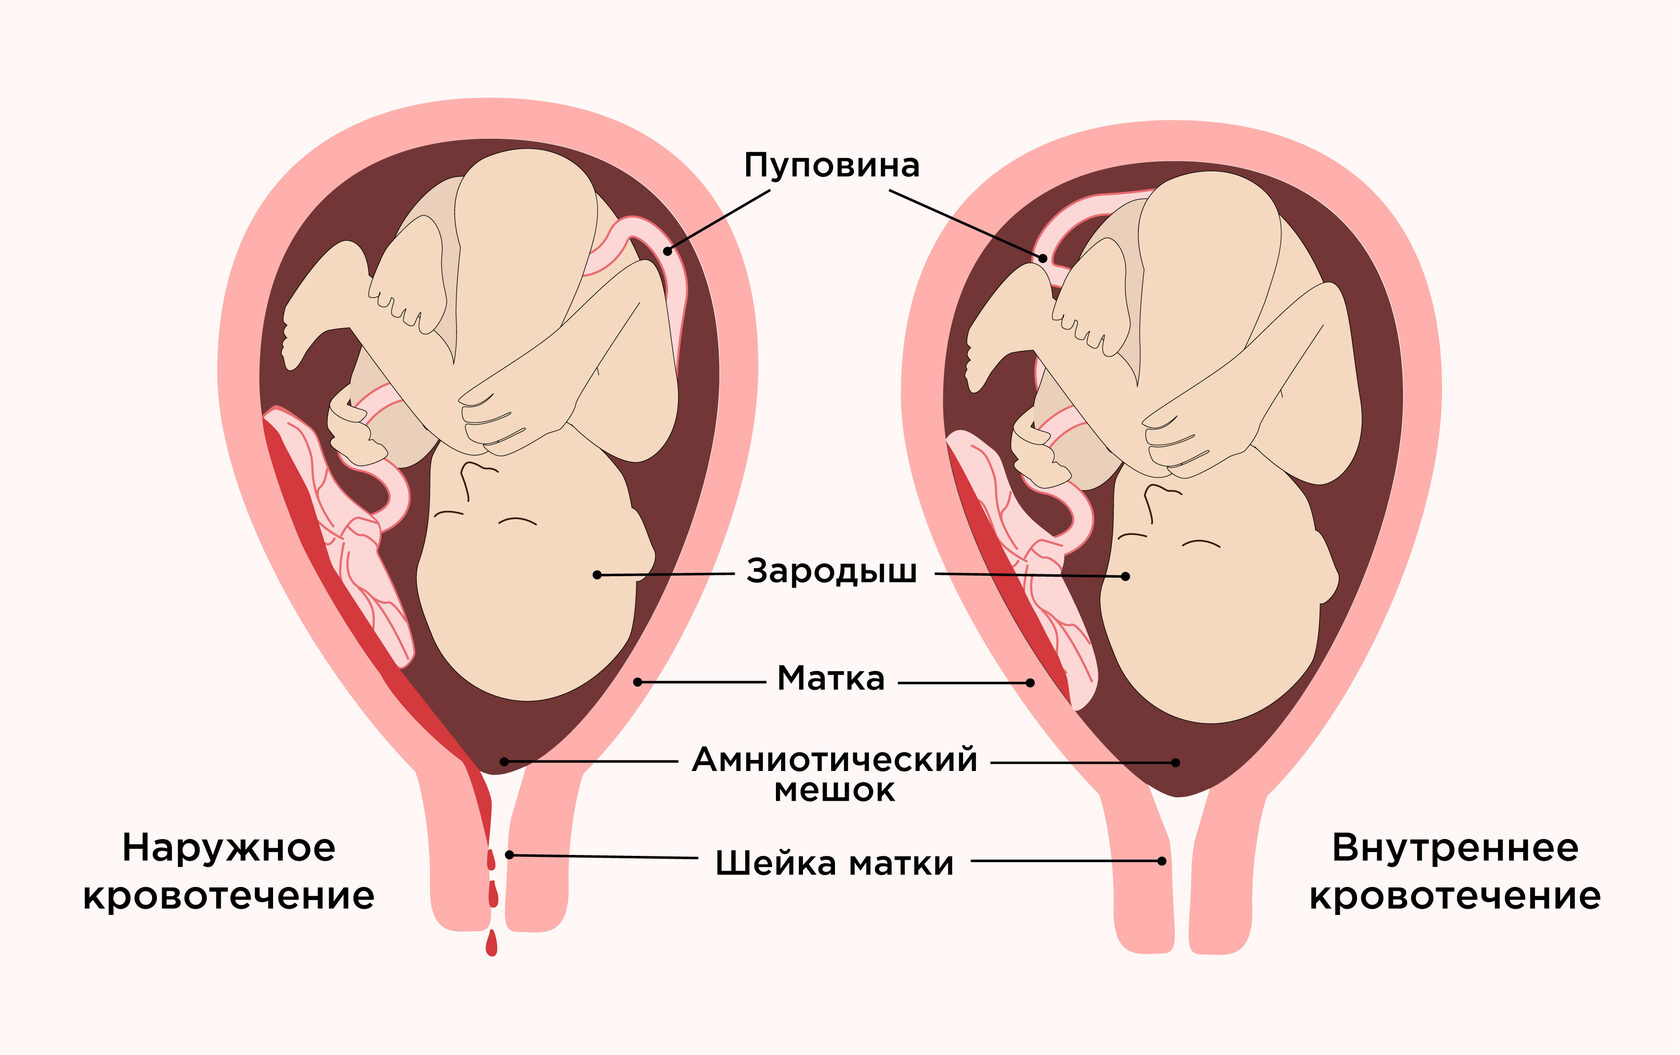 оргазм и гипертонус матки при беременности фото 65